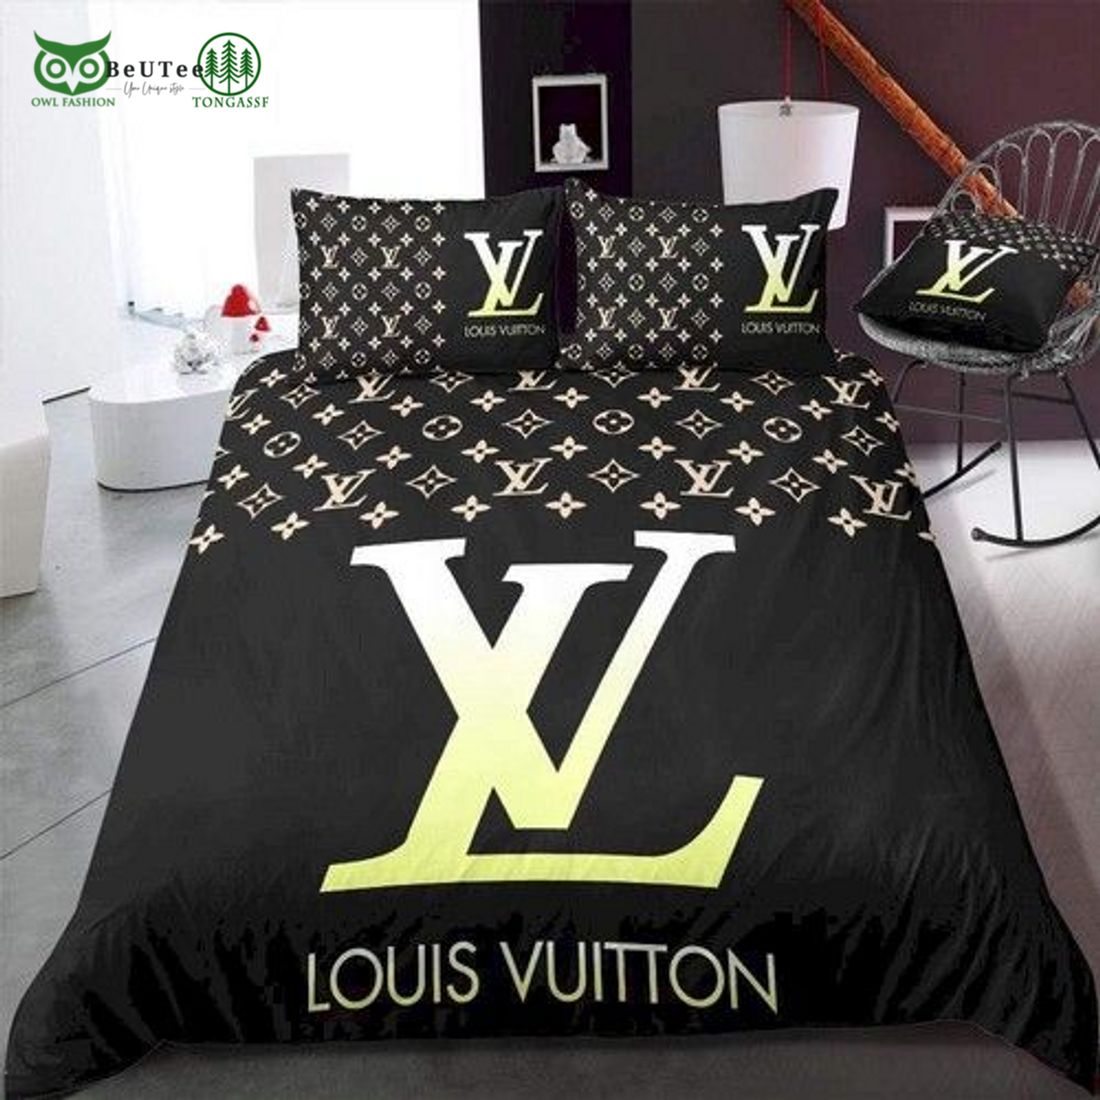 lv louis vuitton luxury brand black bedding set bedroom 1 kA3sY